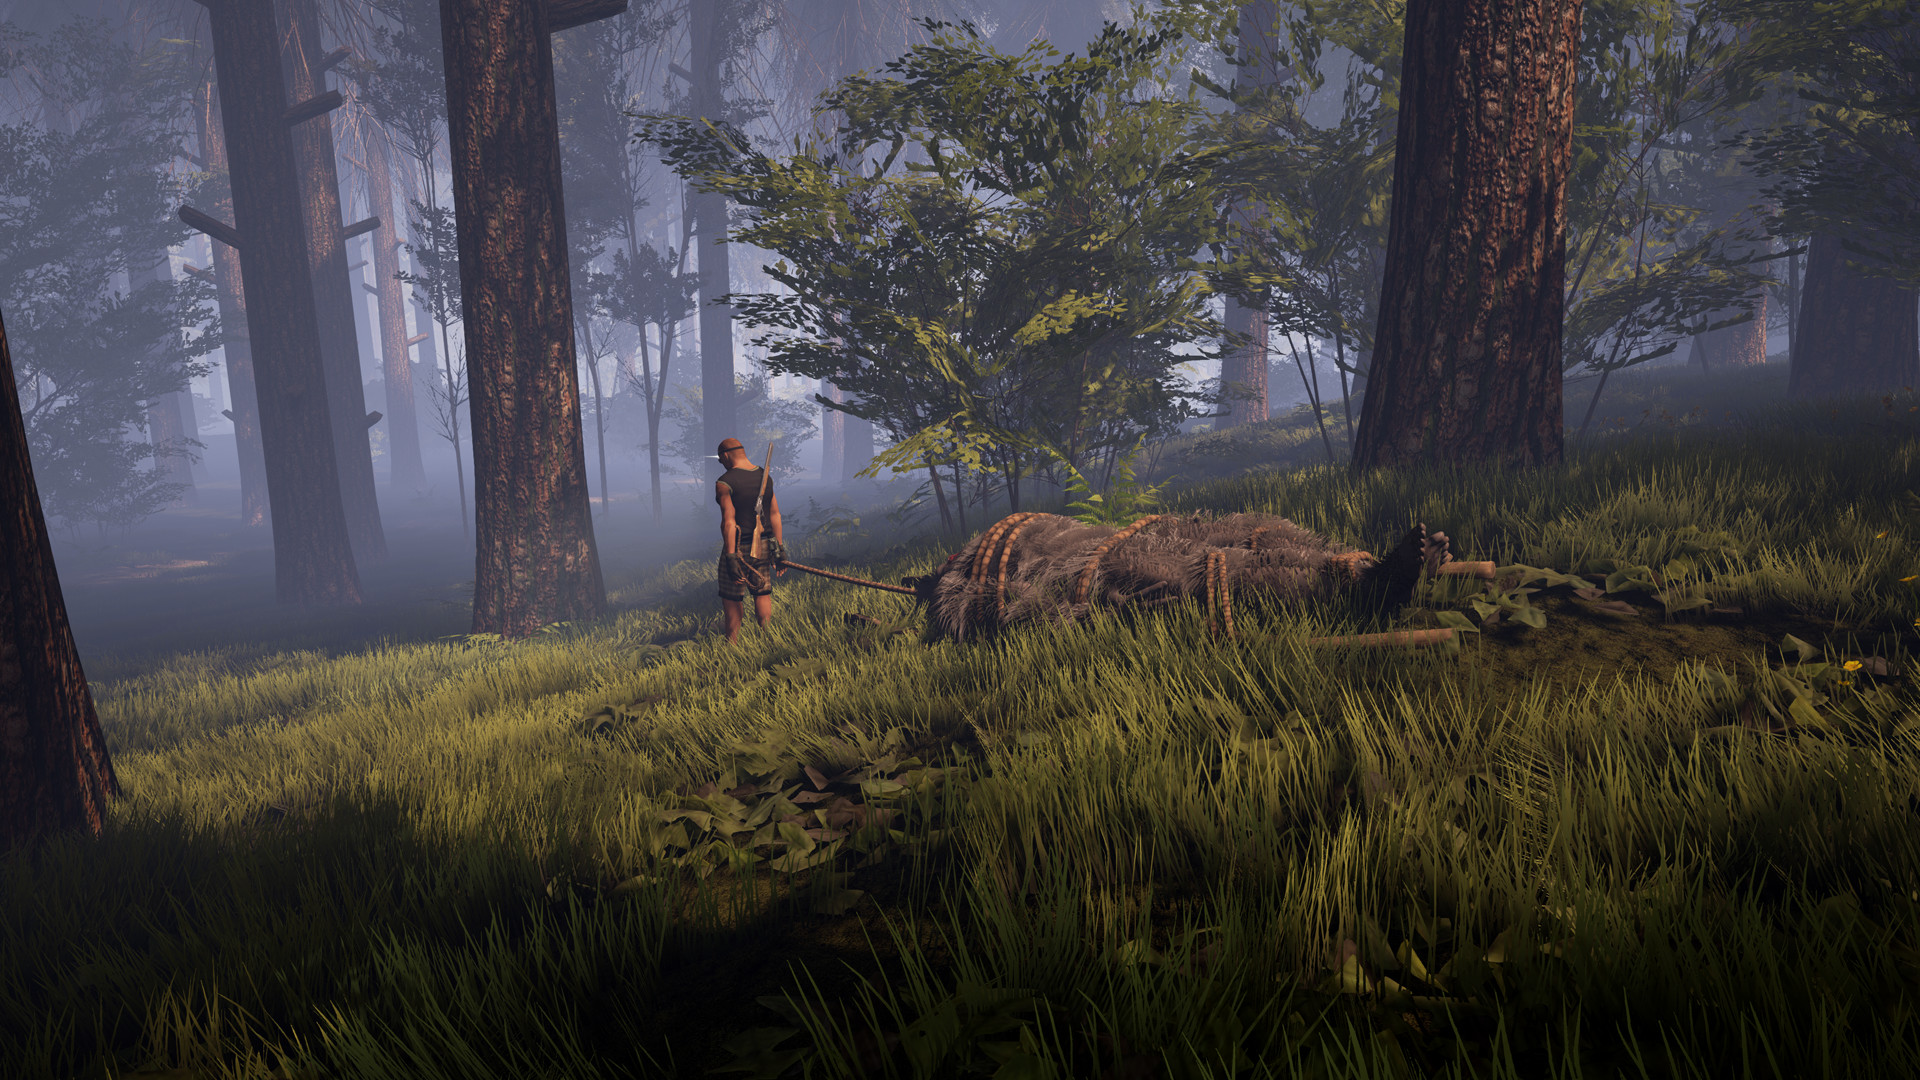 Finding Bigfoot - Hunters Capture Bigfoot! - Let's Play Finding Bigfoot  Multiplayer Gameplay 